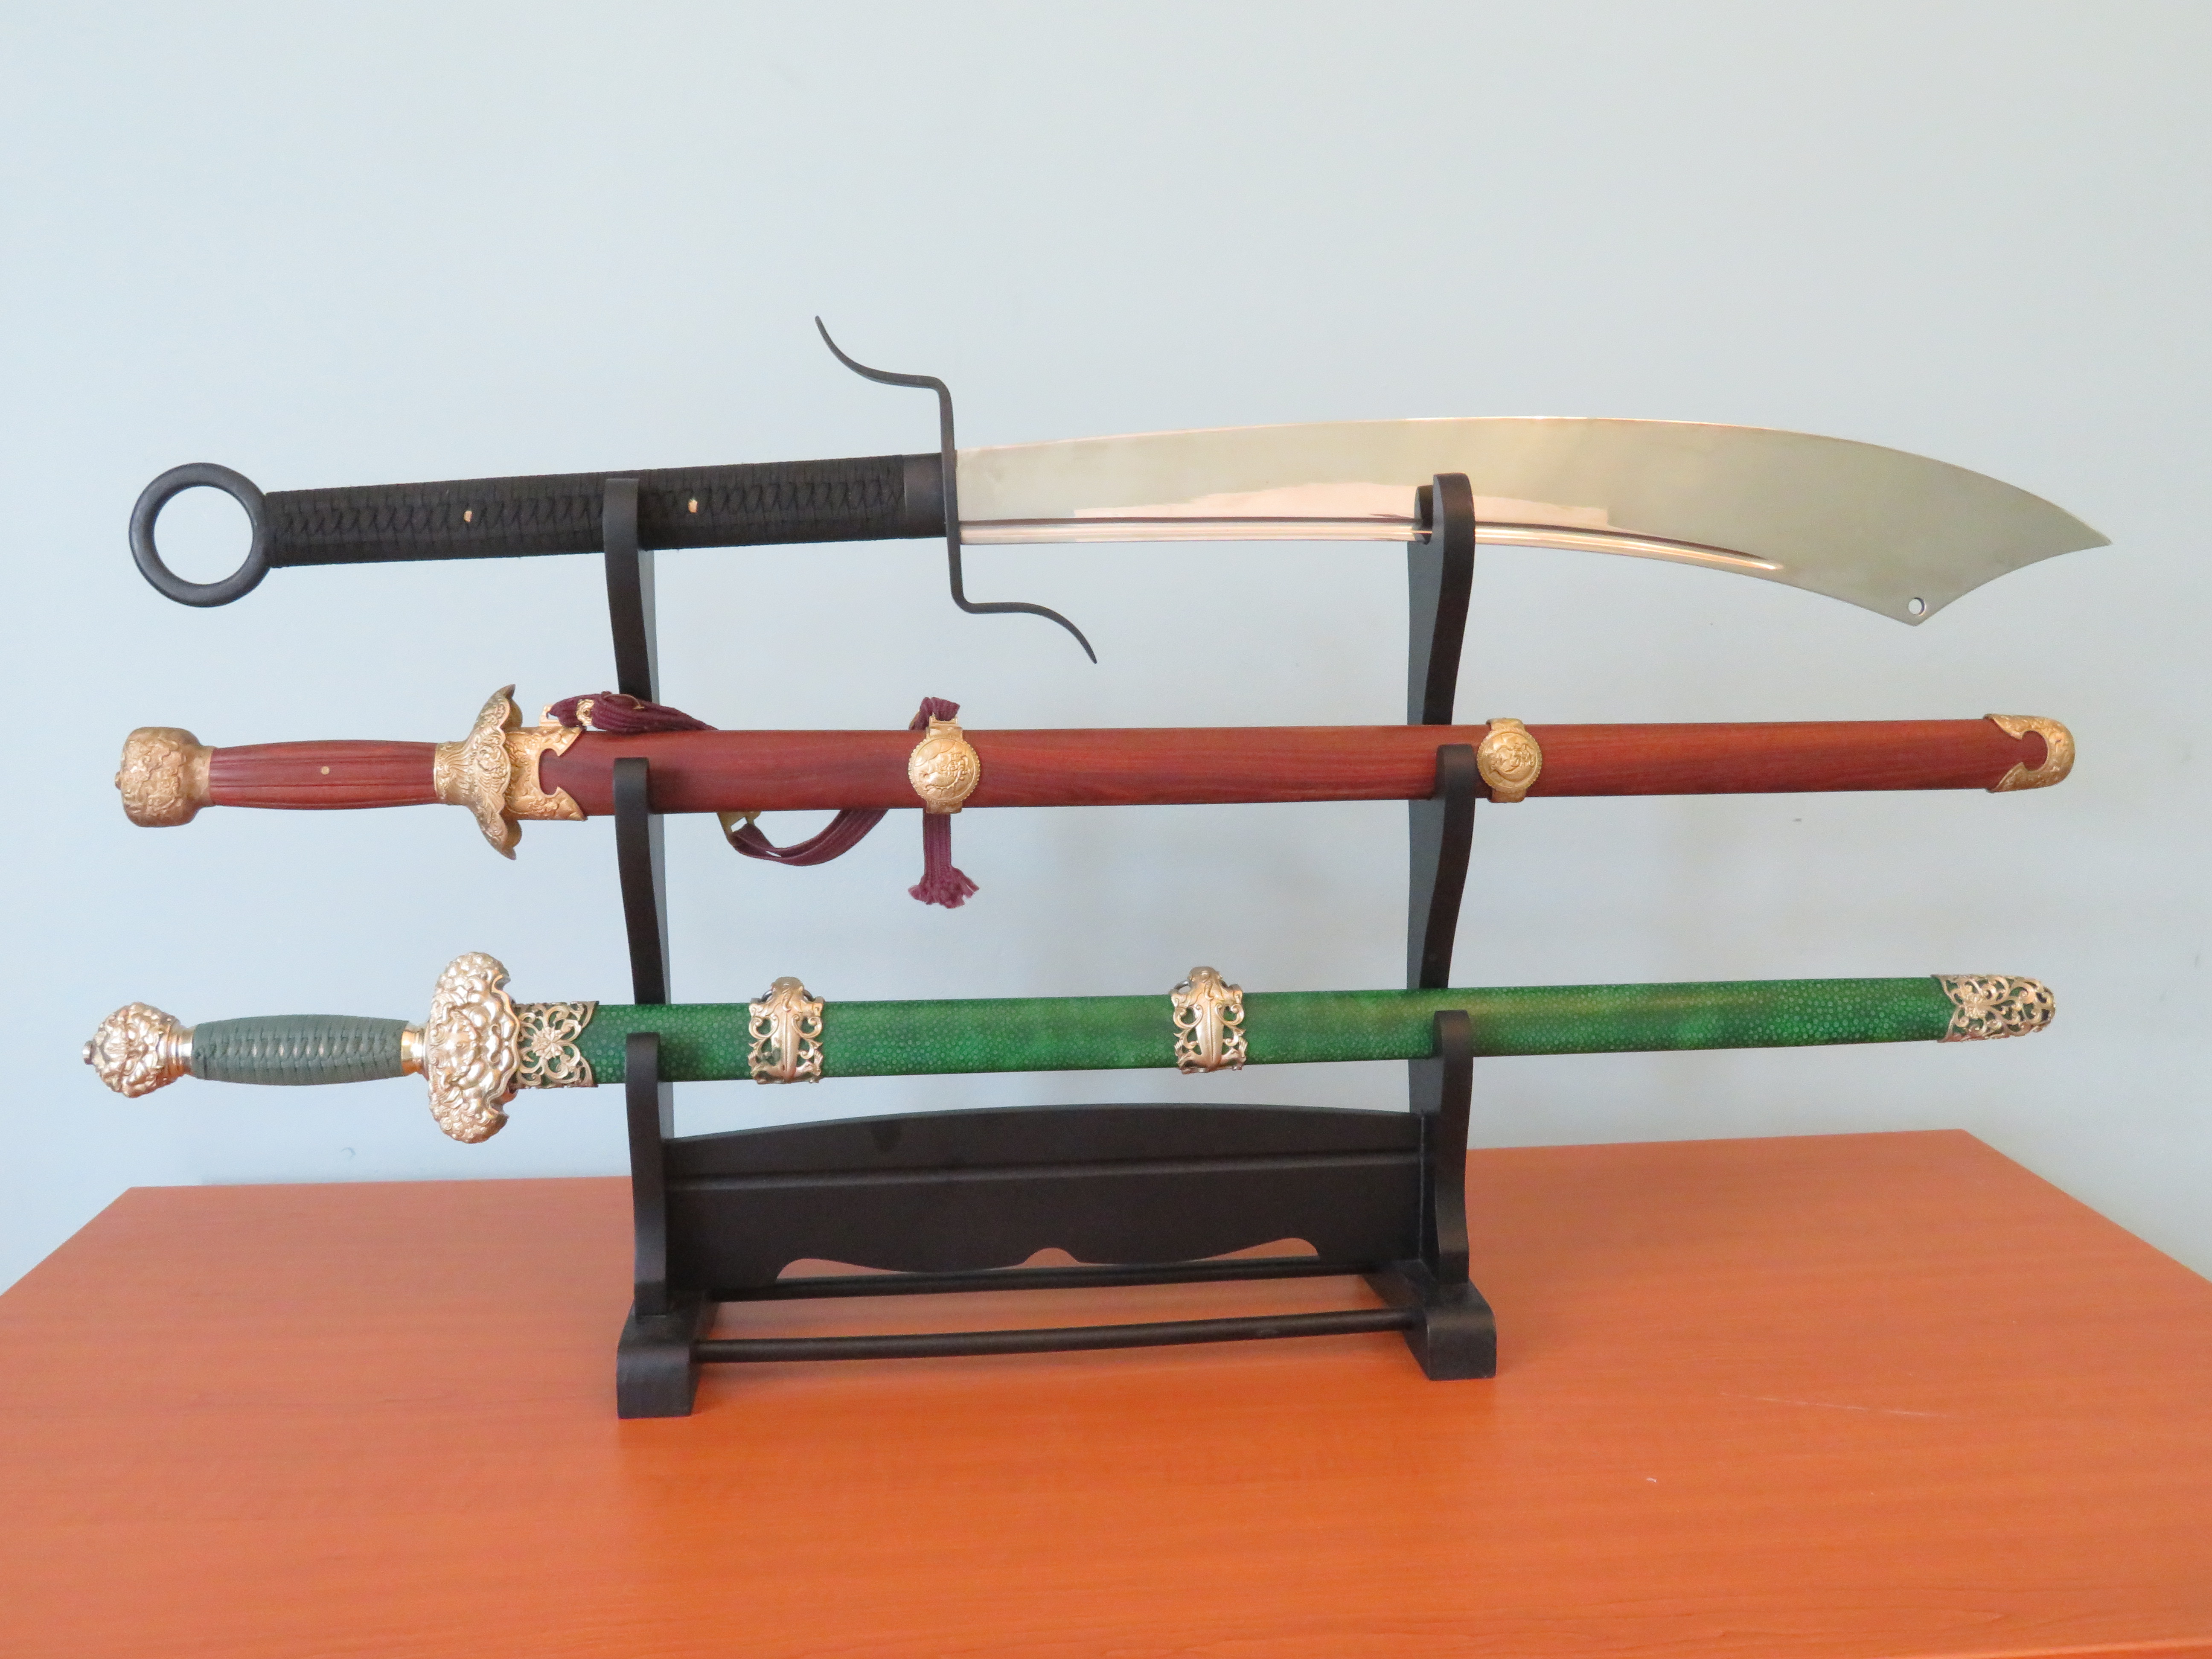 www.cold-steel.cz_Čínské zbraně od společnosti Cold Steel – War sword, Gym sword a Jade lion gym sword.